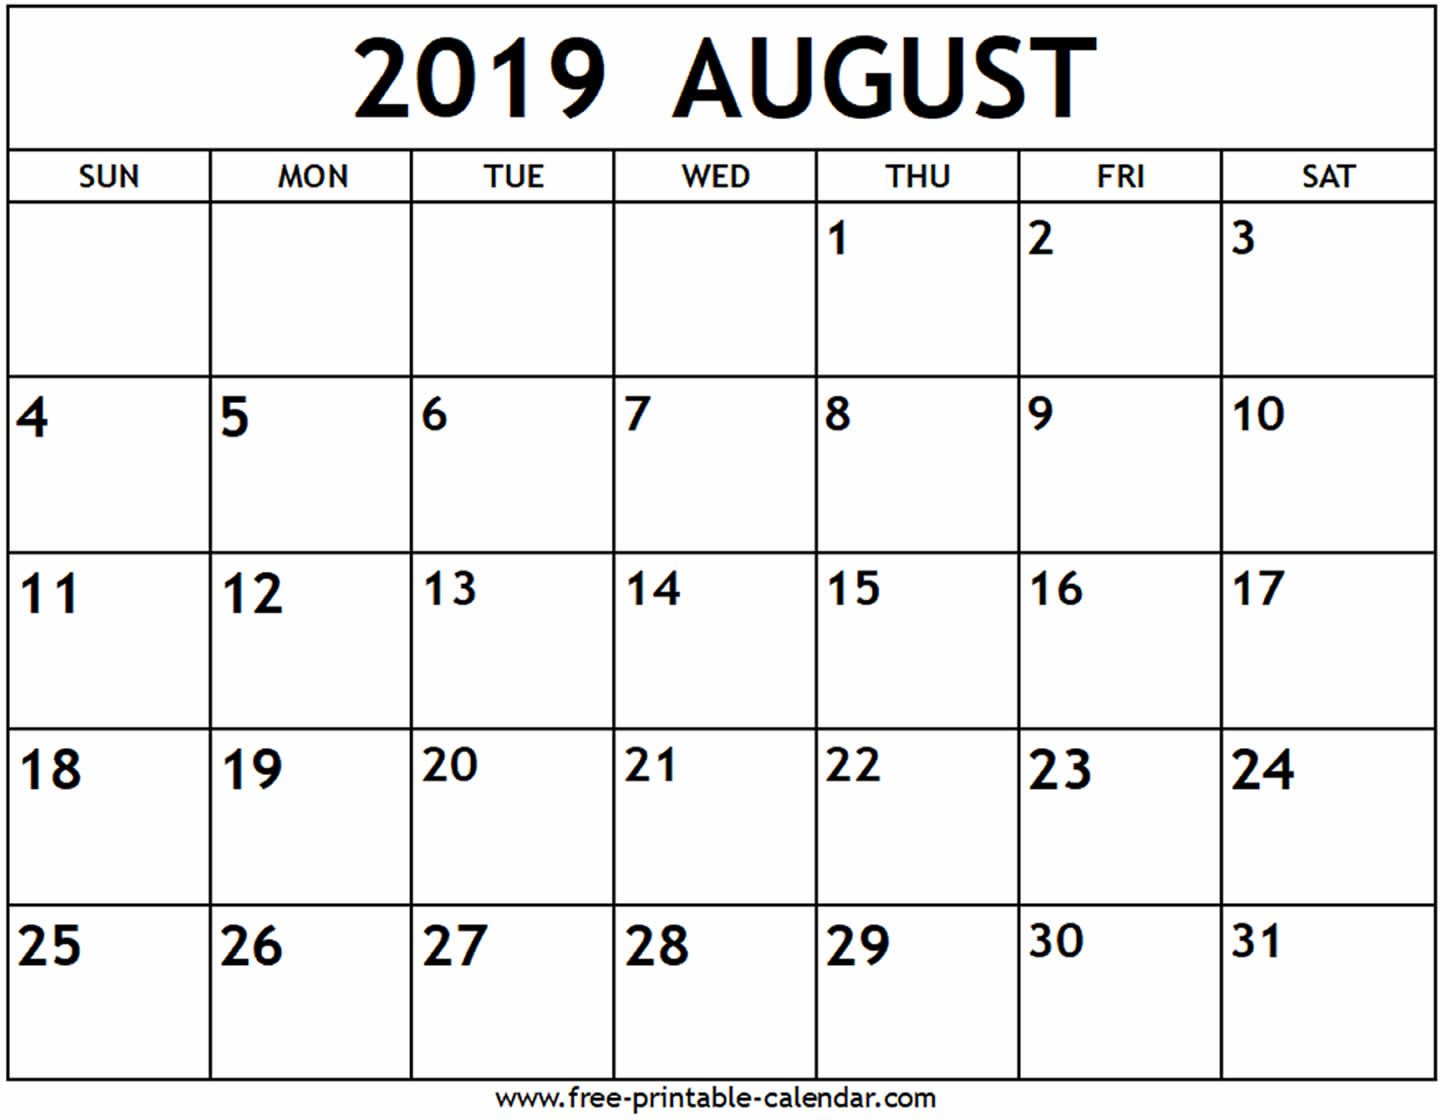 August 2019 Calendar - Free-Printable-Calendar